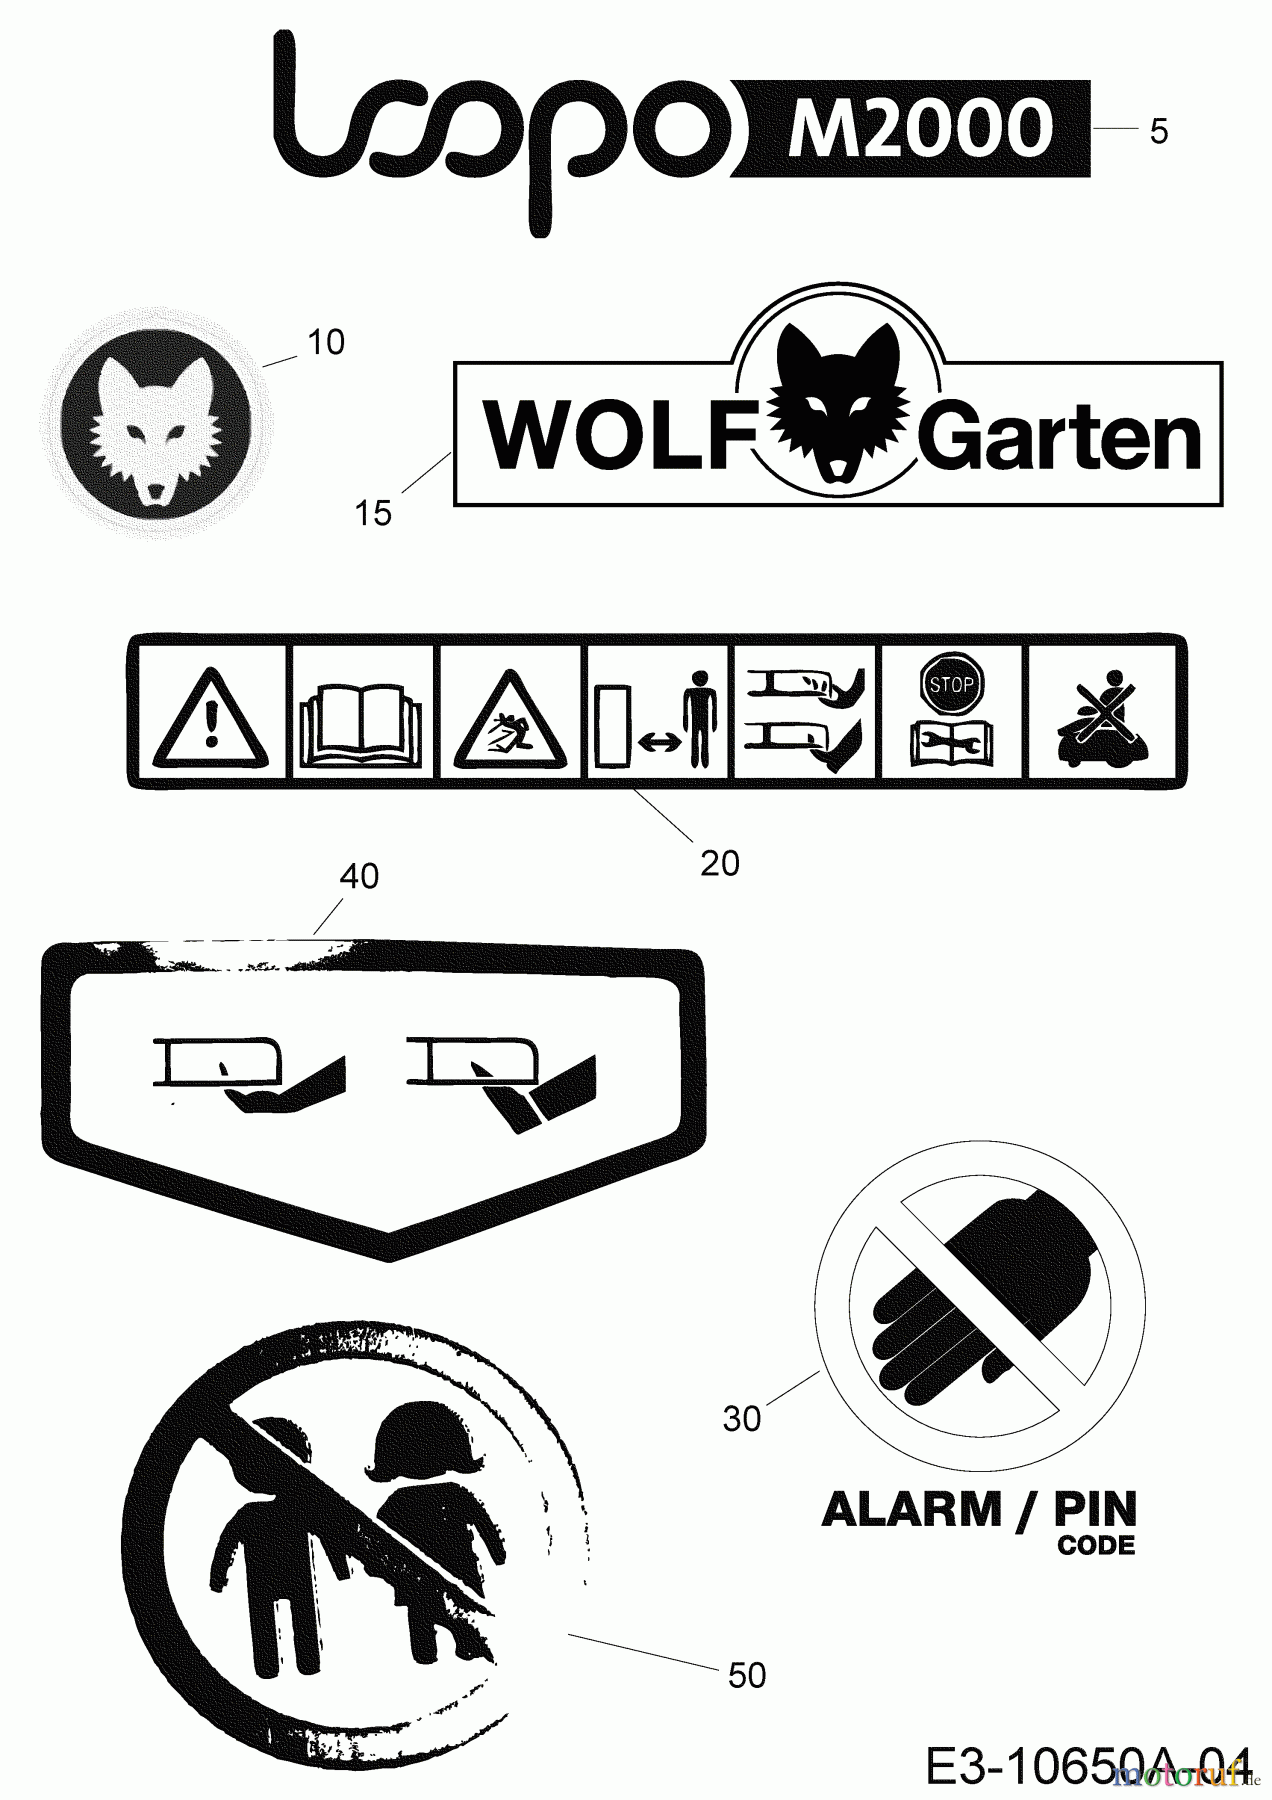  Wolf-Garten Robotic lawn mower Loopo M2000 22BCFAEA650 (2020) Labels